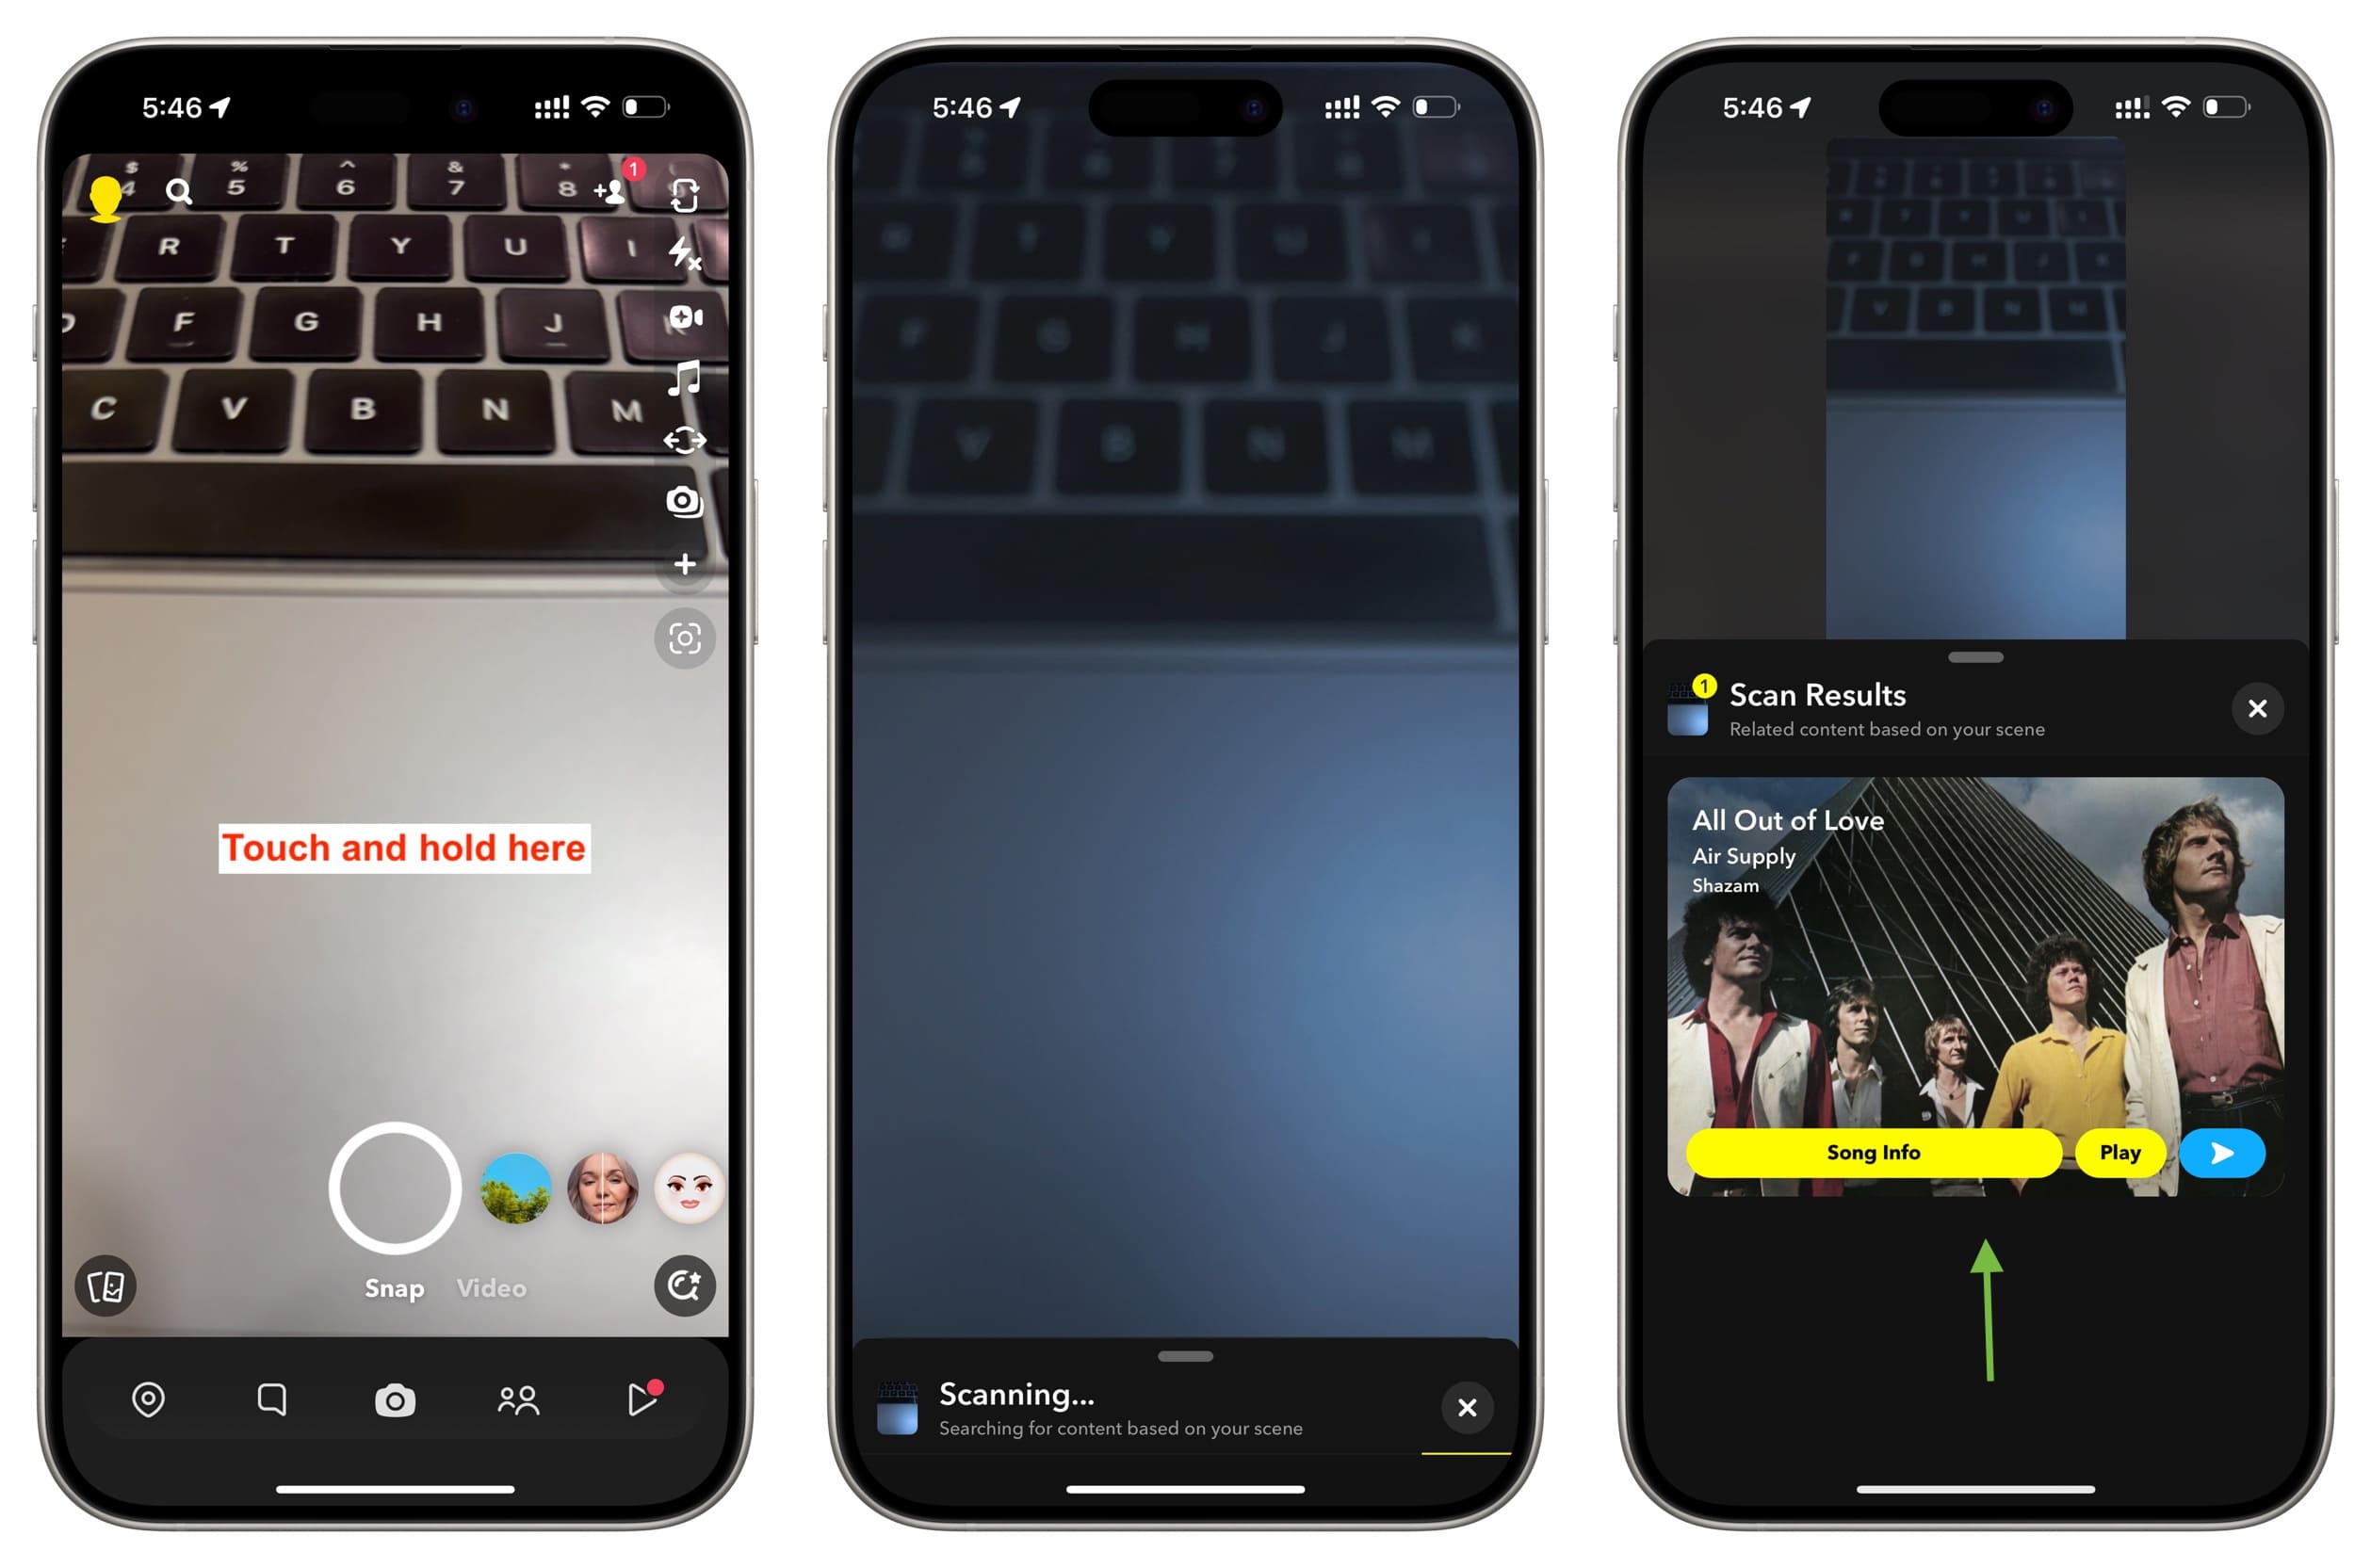 Using Shazam in Snapchat app on iPhone